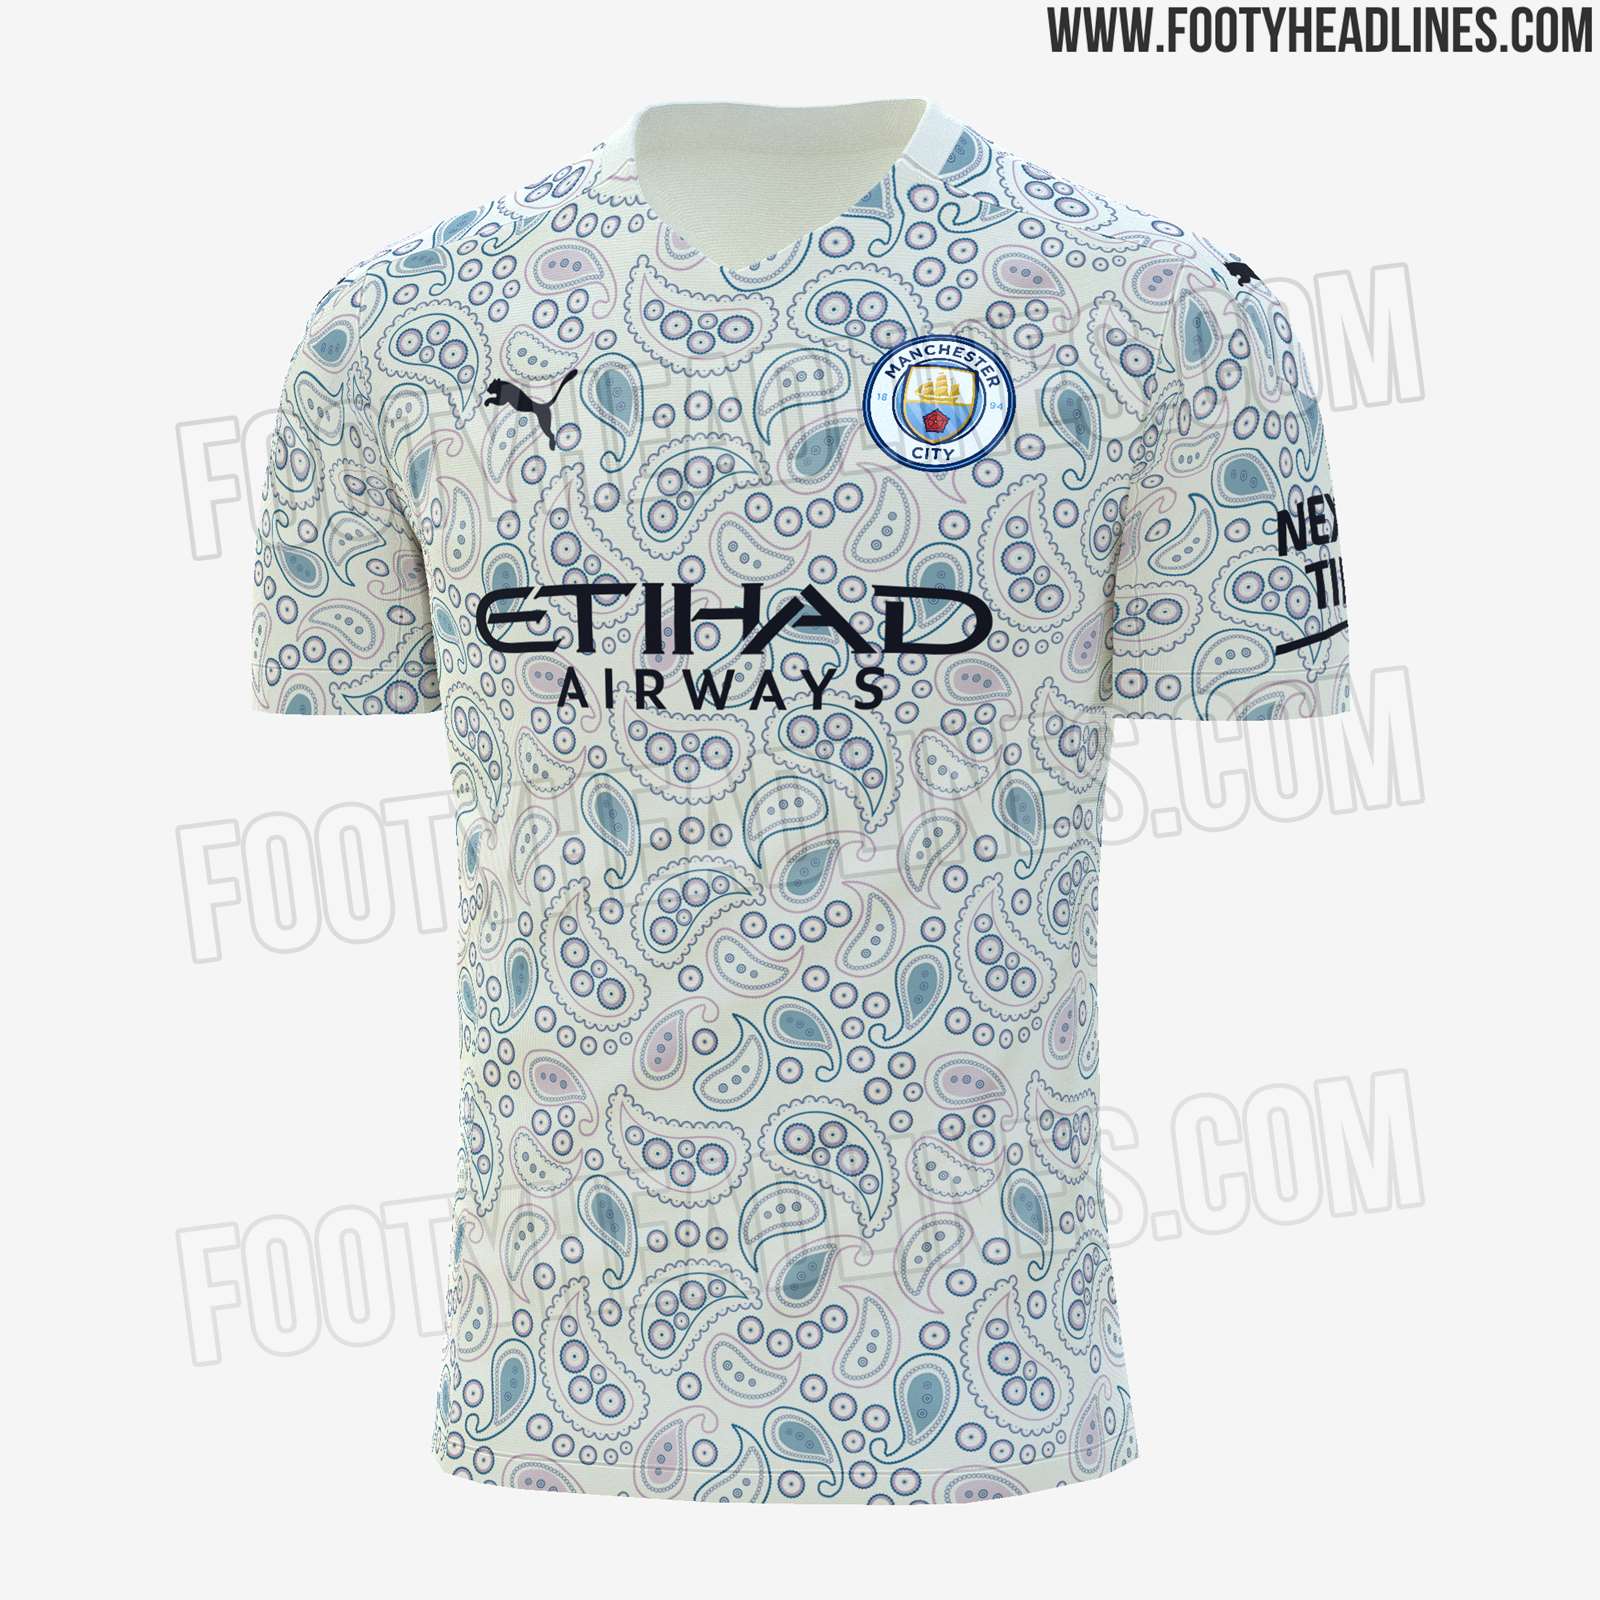 Camiseta Manchester City 2020 2021 tercera @footyheadlines